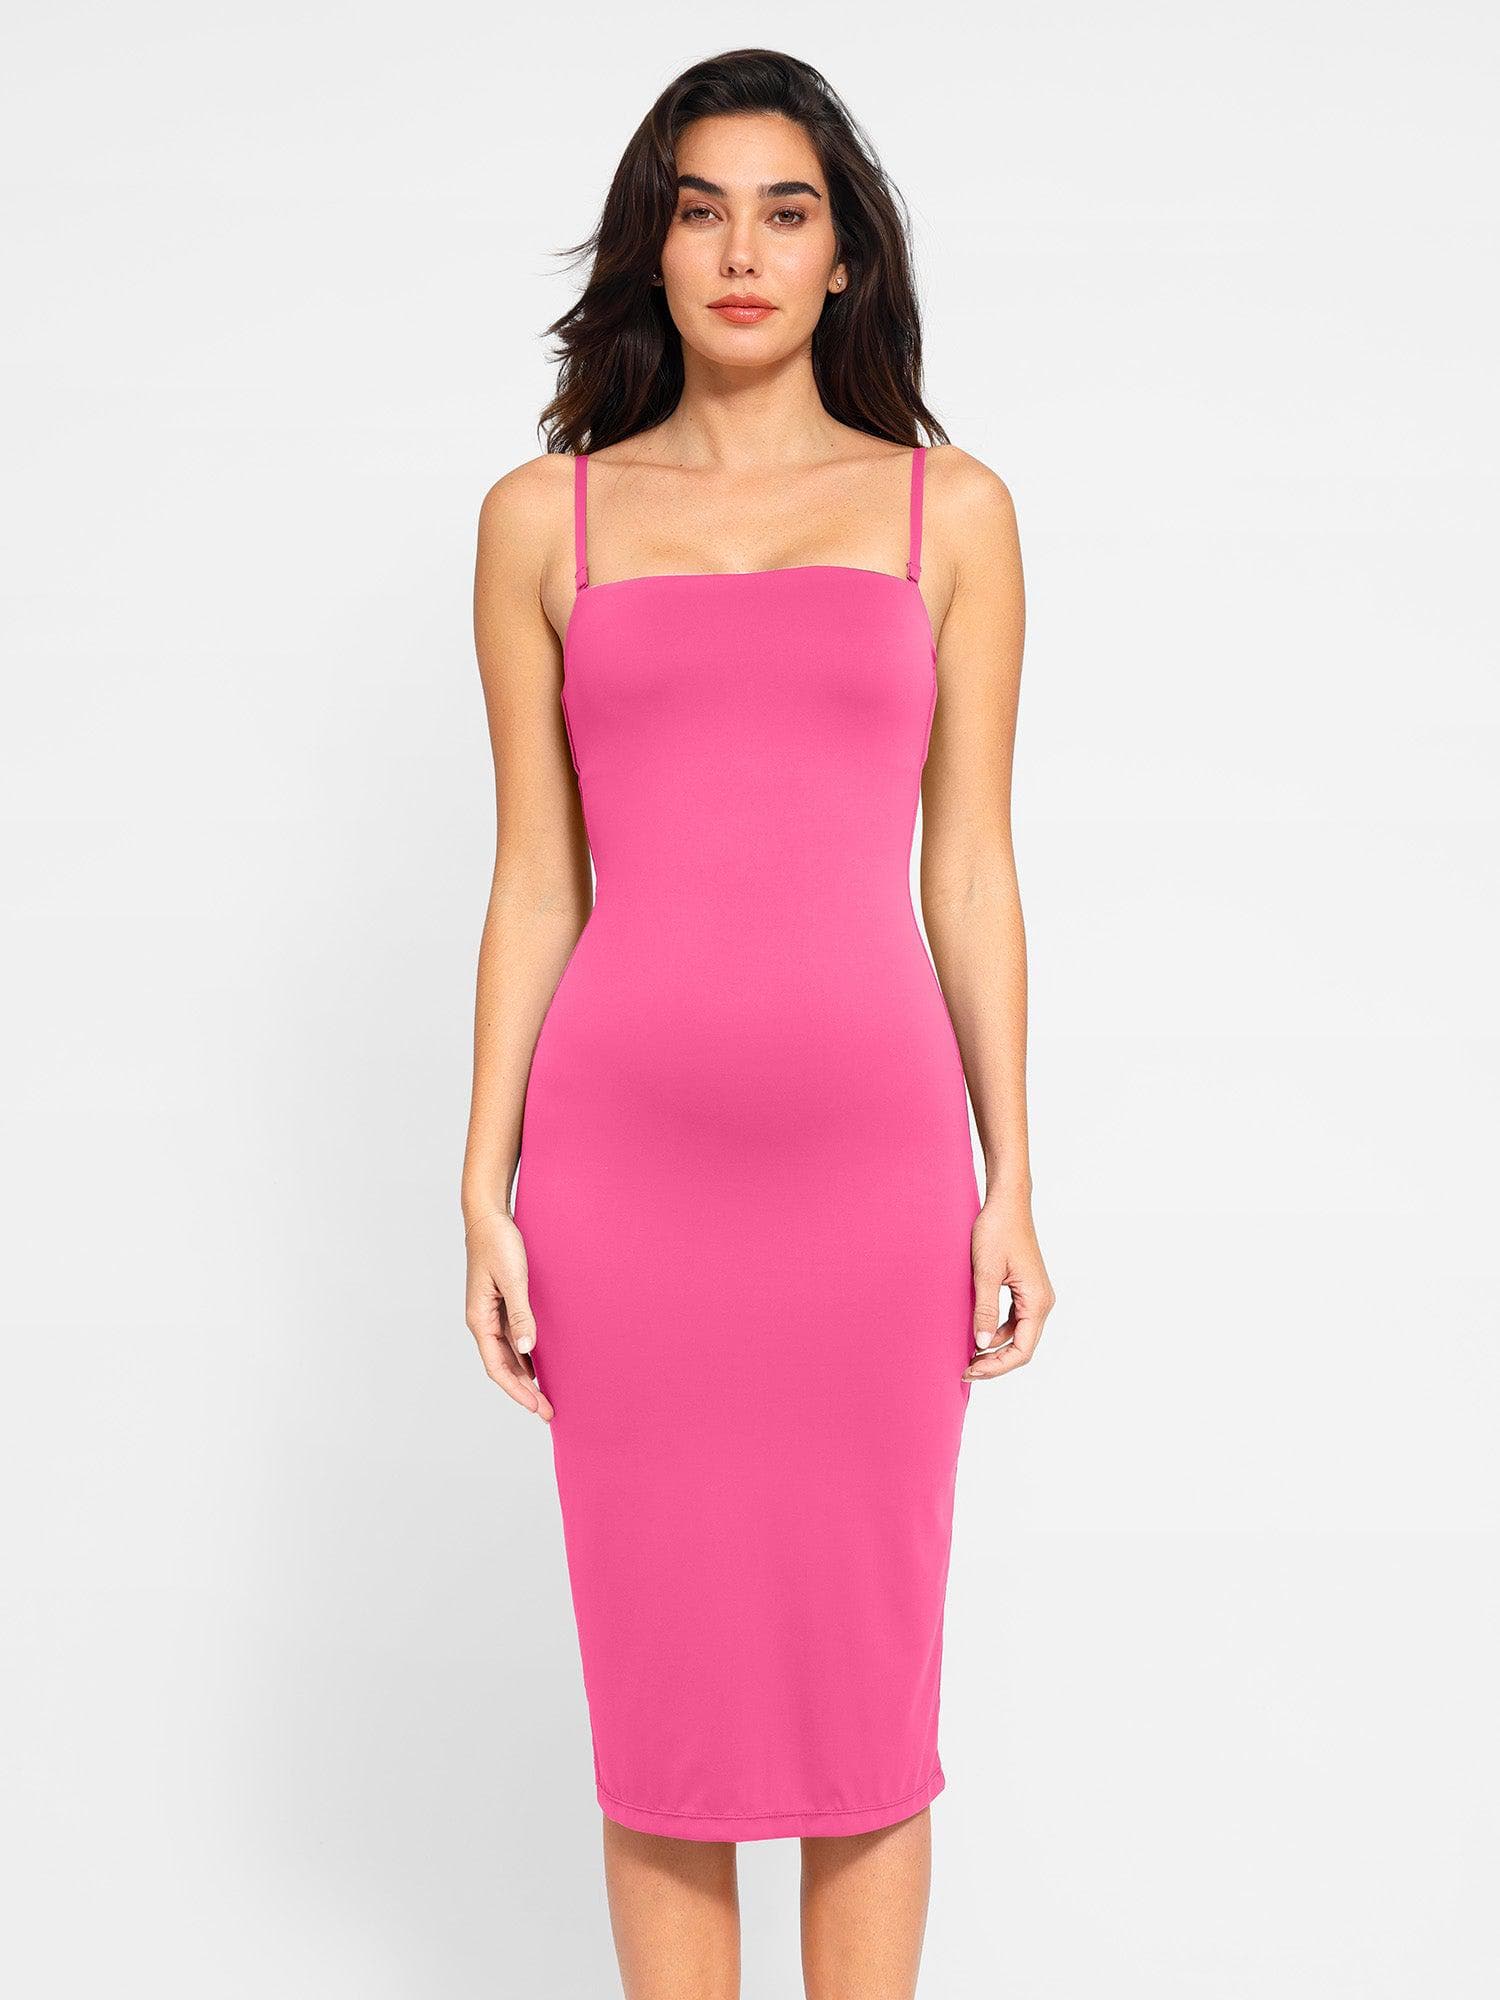 Popilush® Cooling Bodycon Summer Dress Set Dress / Pink / S Bluetag Cooling Built-In Shapewear Tube Maxi Dress Or Shrug